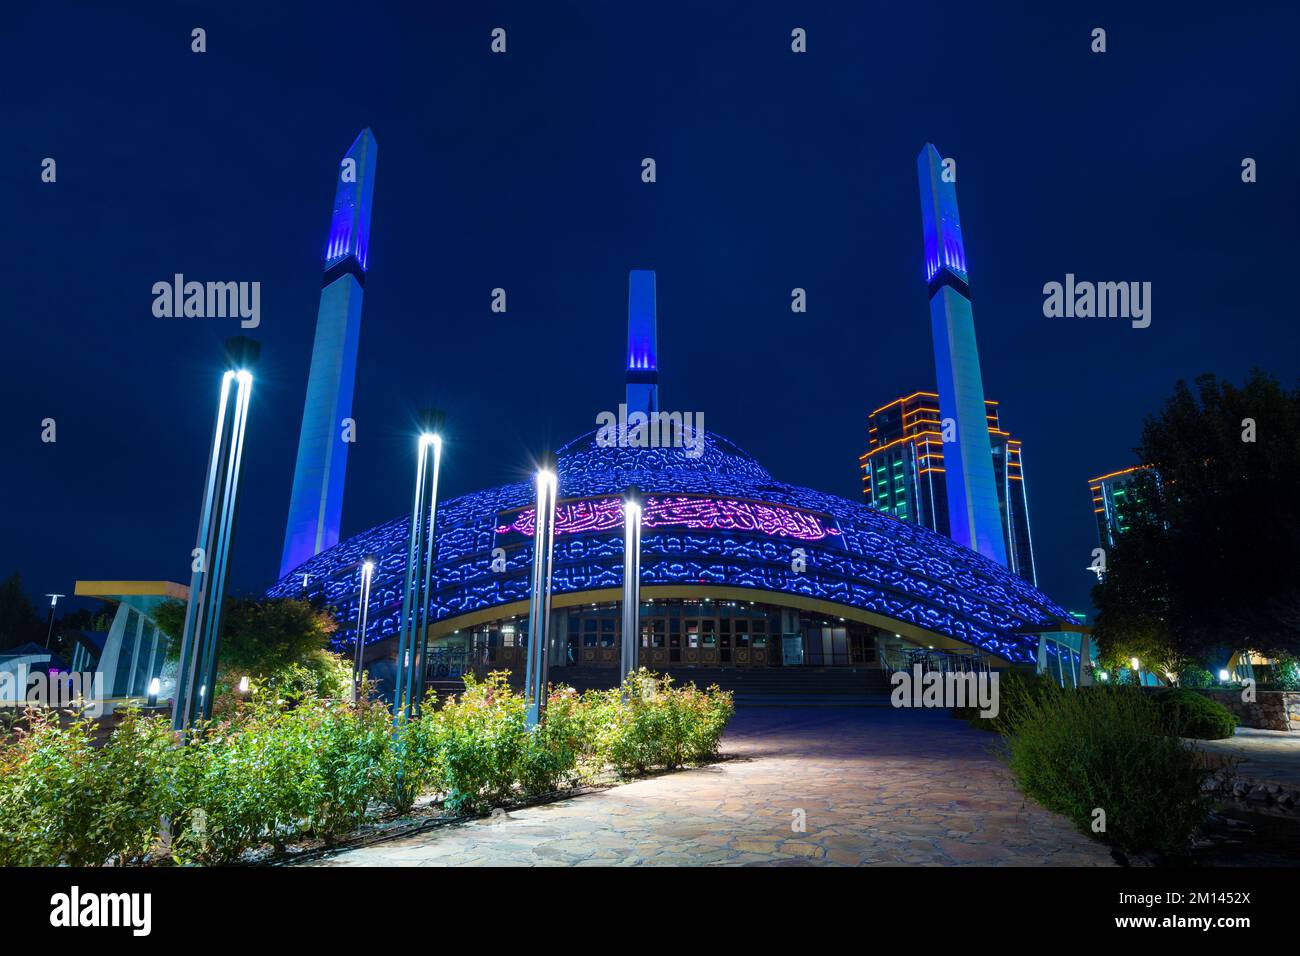 ARGUN, RUSSIA - SEPTEMBER 28, 2021: Mosque 'Mother's Heart' in night blue illumination on September night Stock Photo